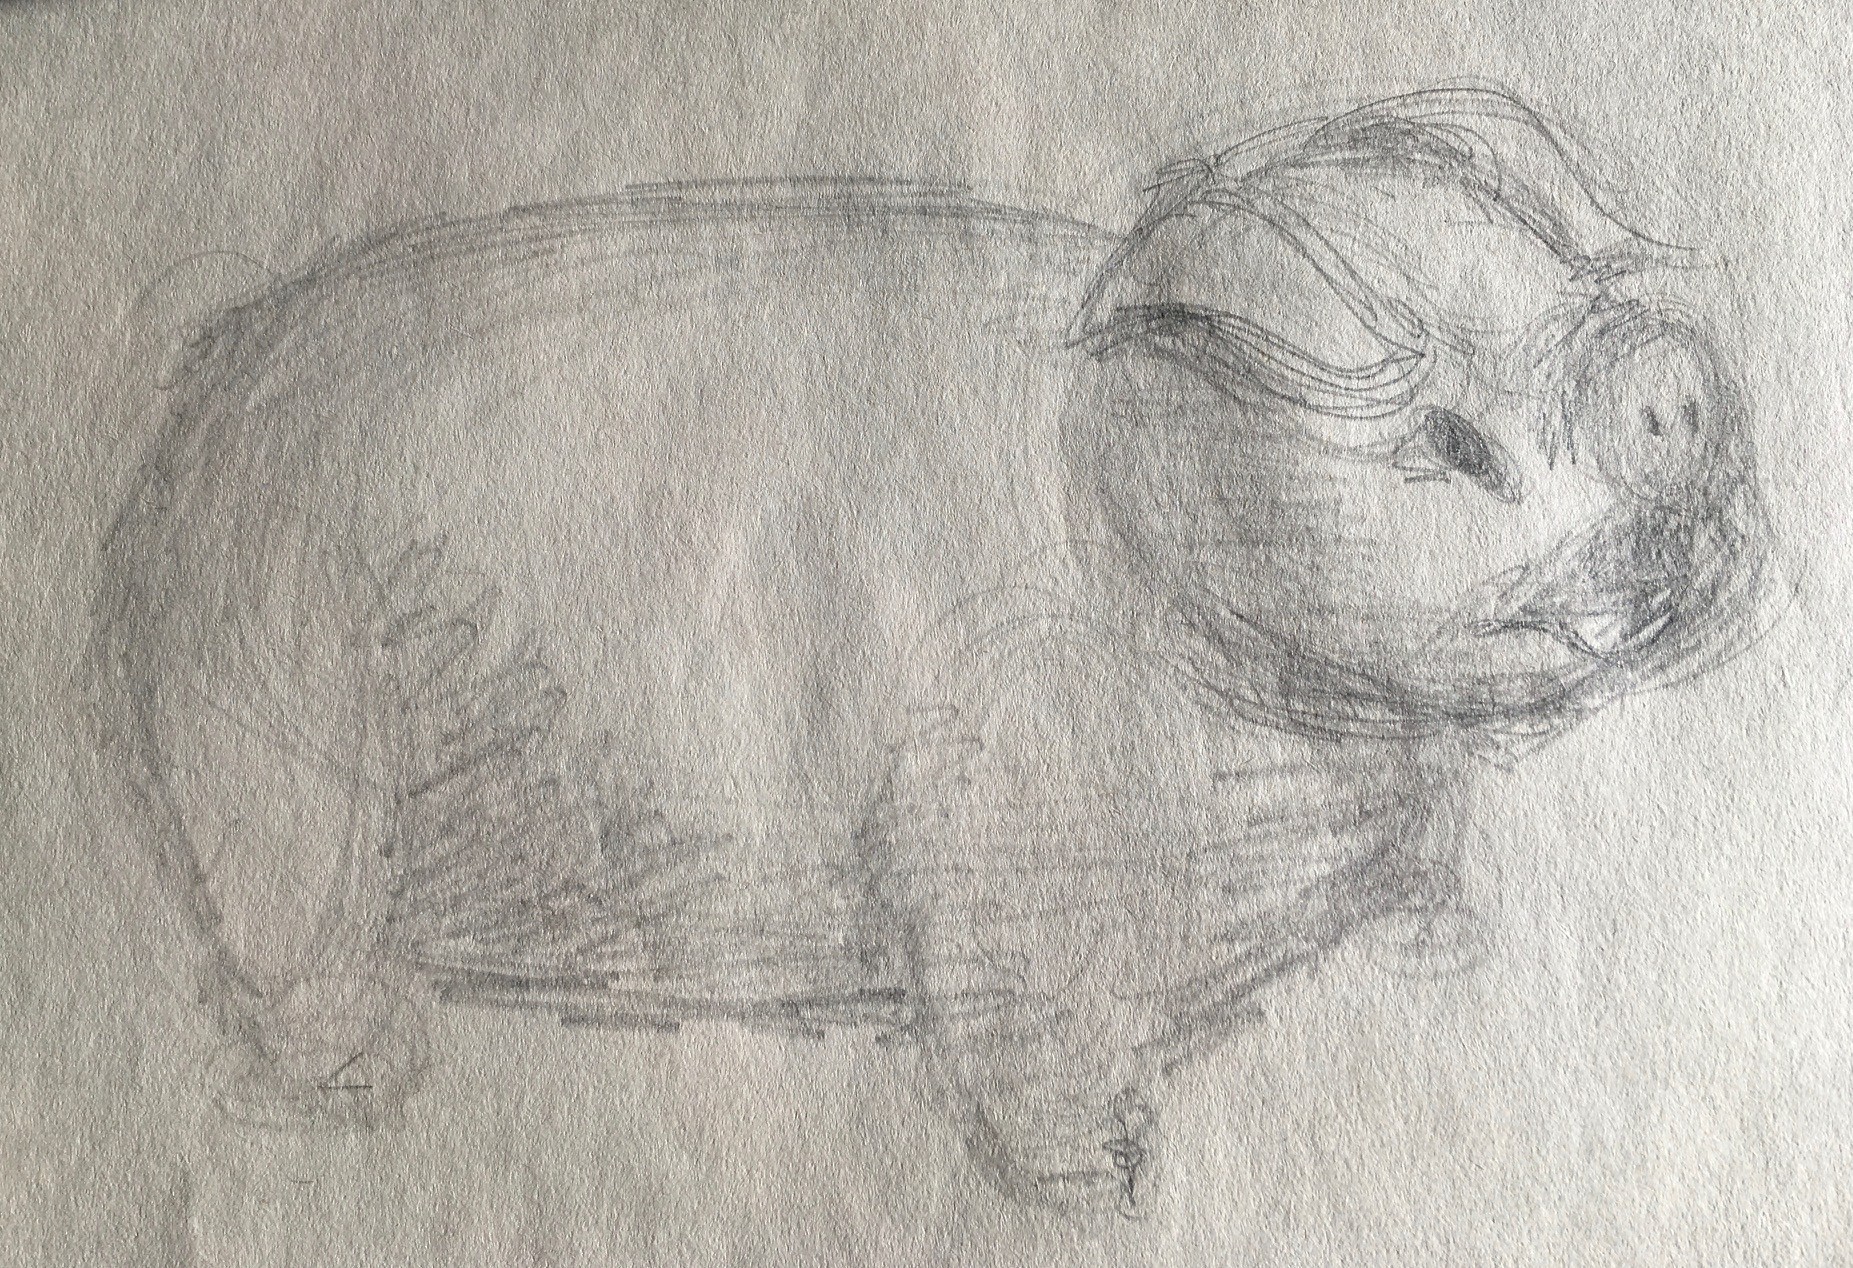 Pig, 2018
Pencil on Paper
9"W x 6.5"H, Walli White, artist